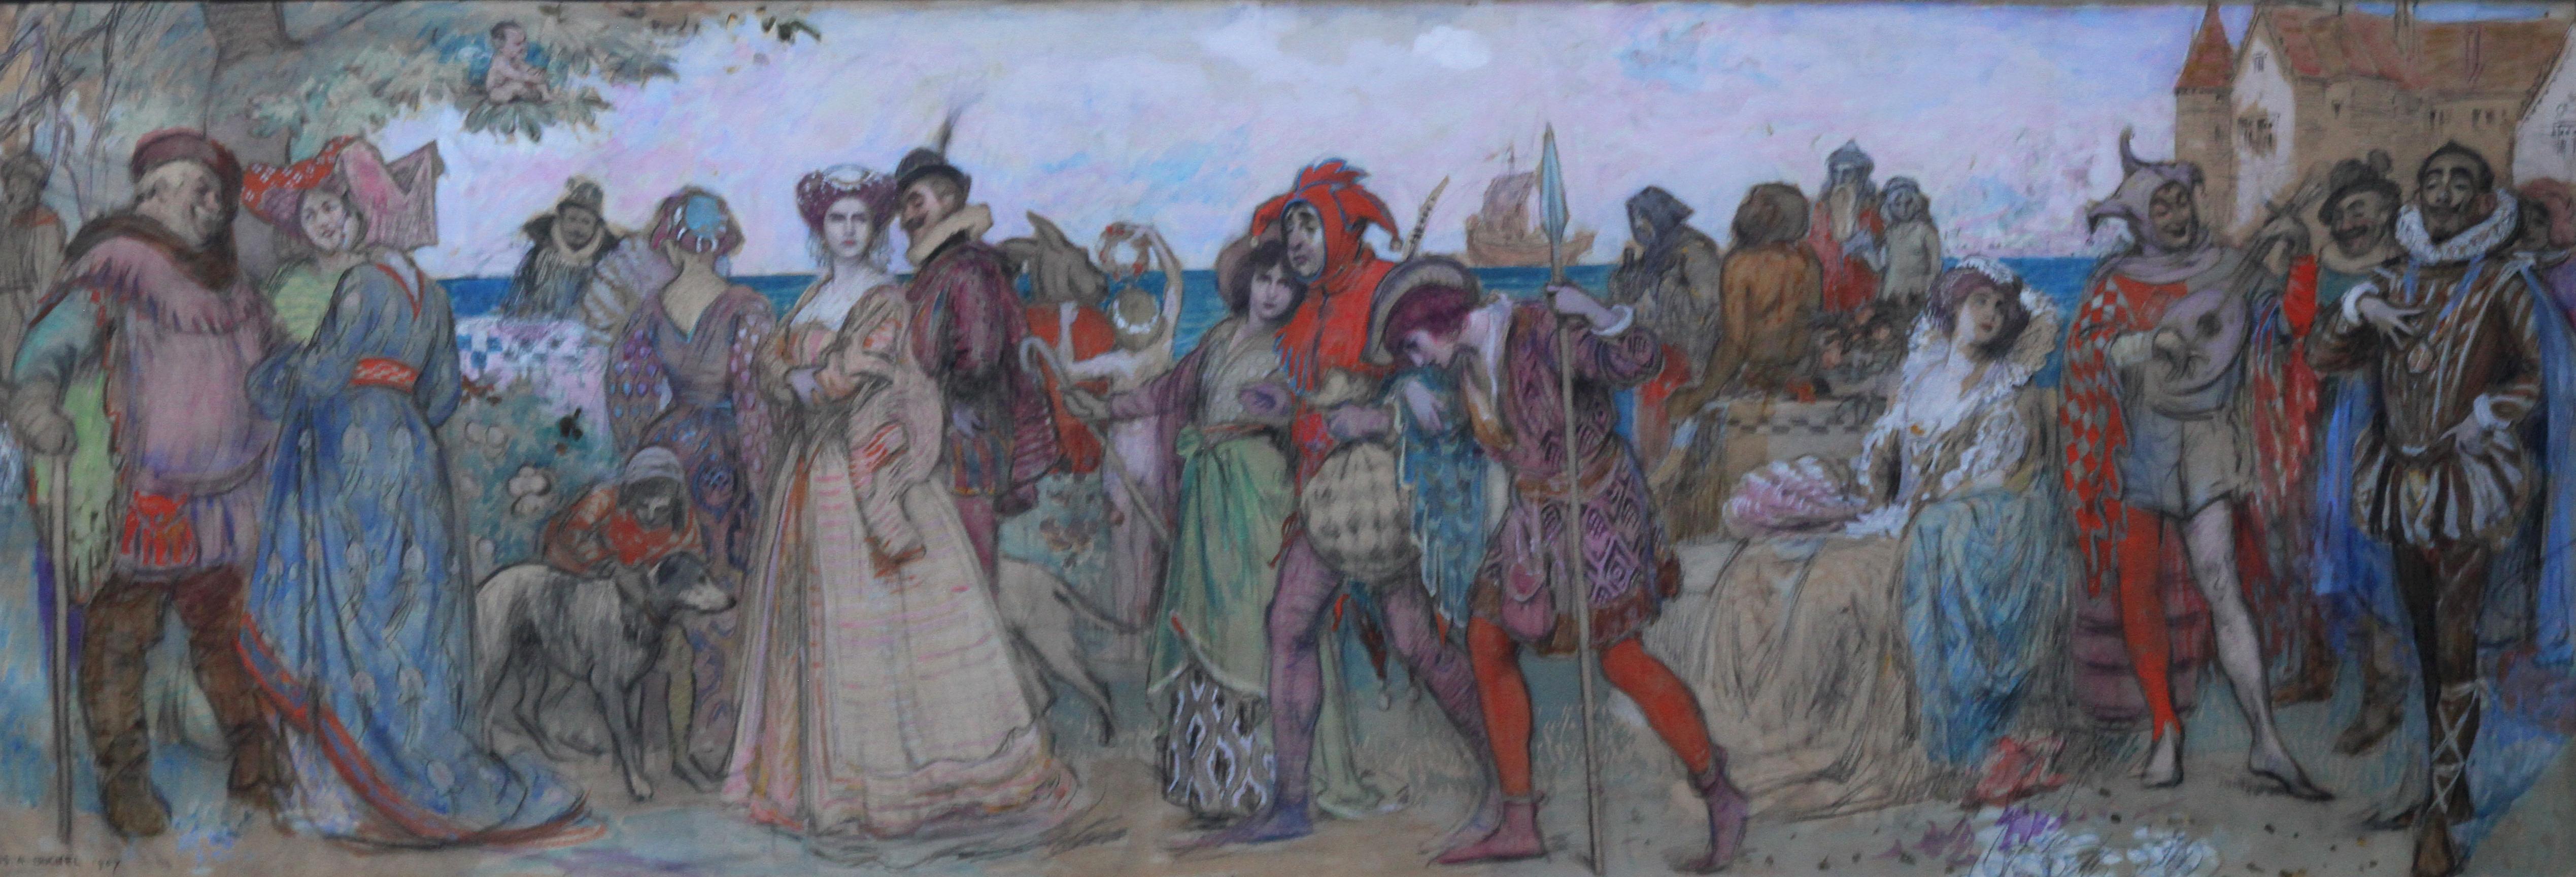 The Procession - British Edwardian art A Midsummer Night's Dream Shakespeare 3